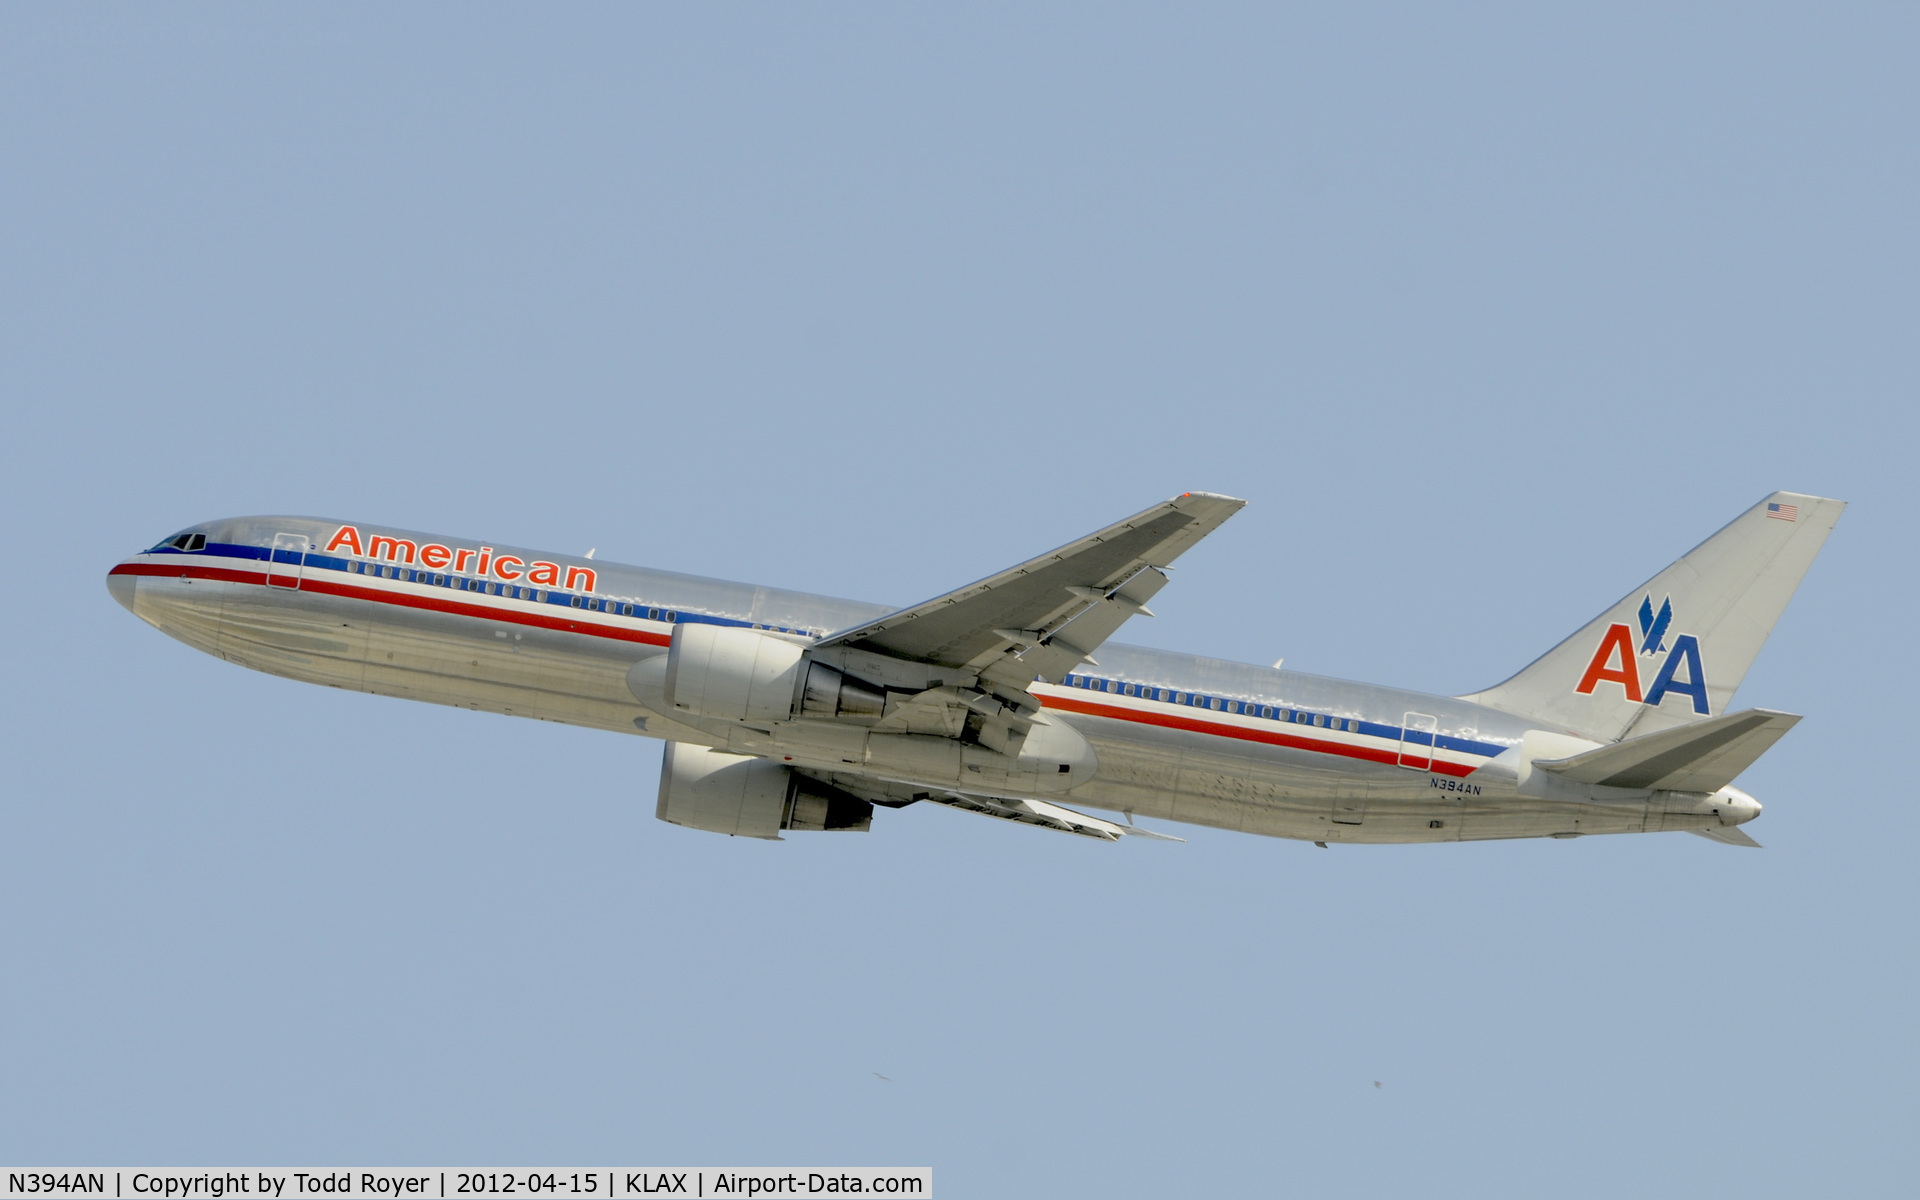 N394AN, 1998 Boeing 767-323/ER C/N 29431, Departing LAX on 25R